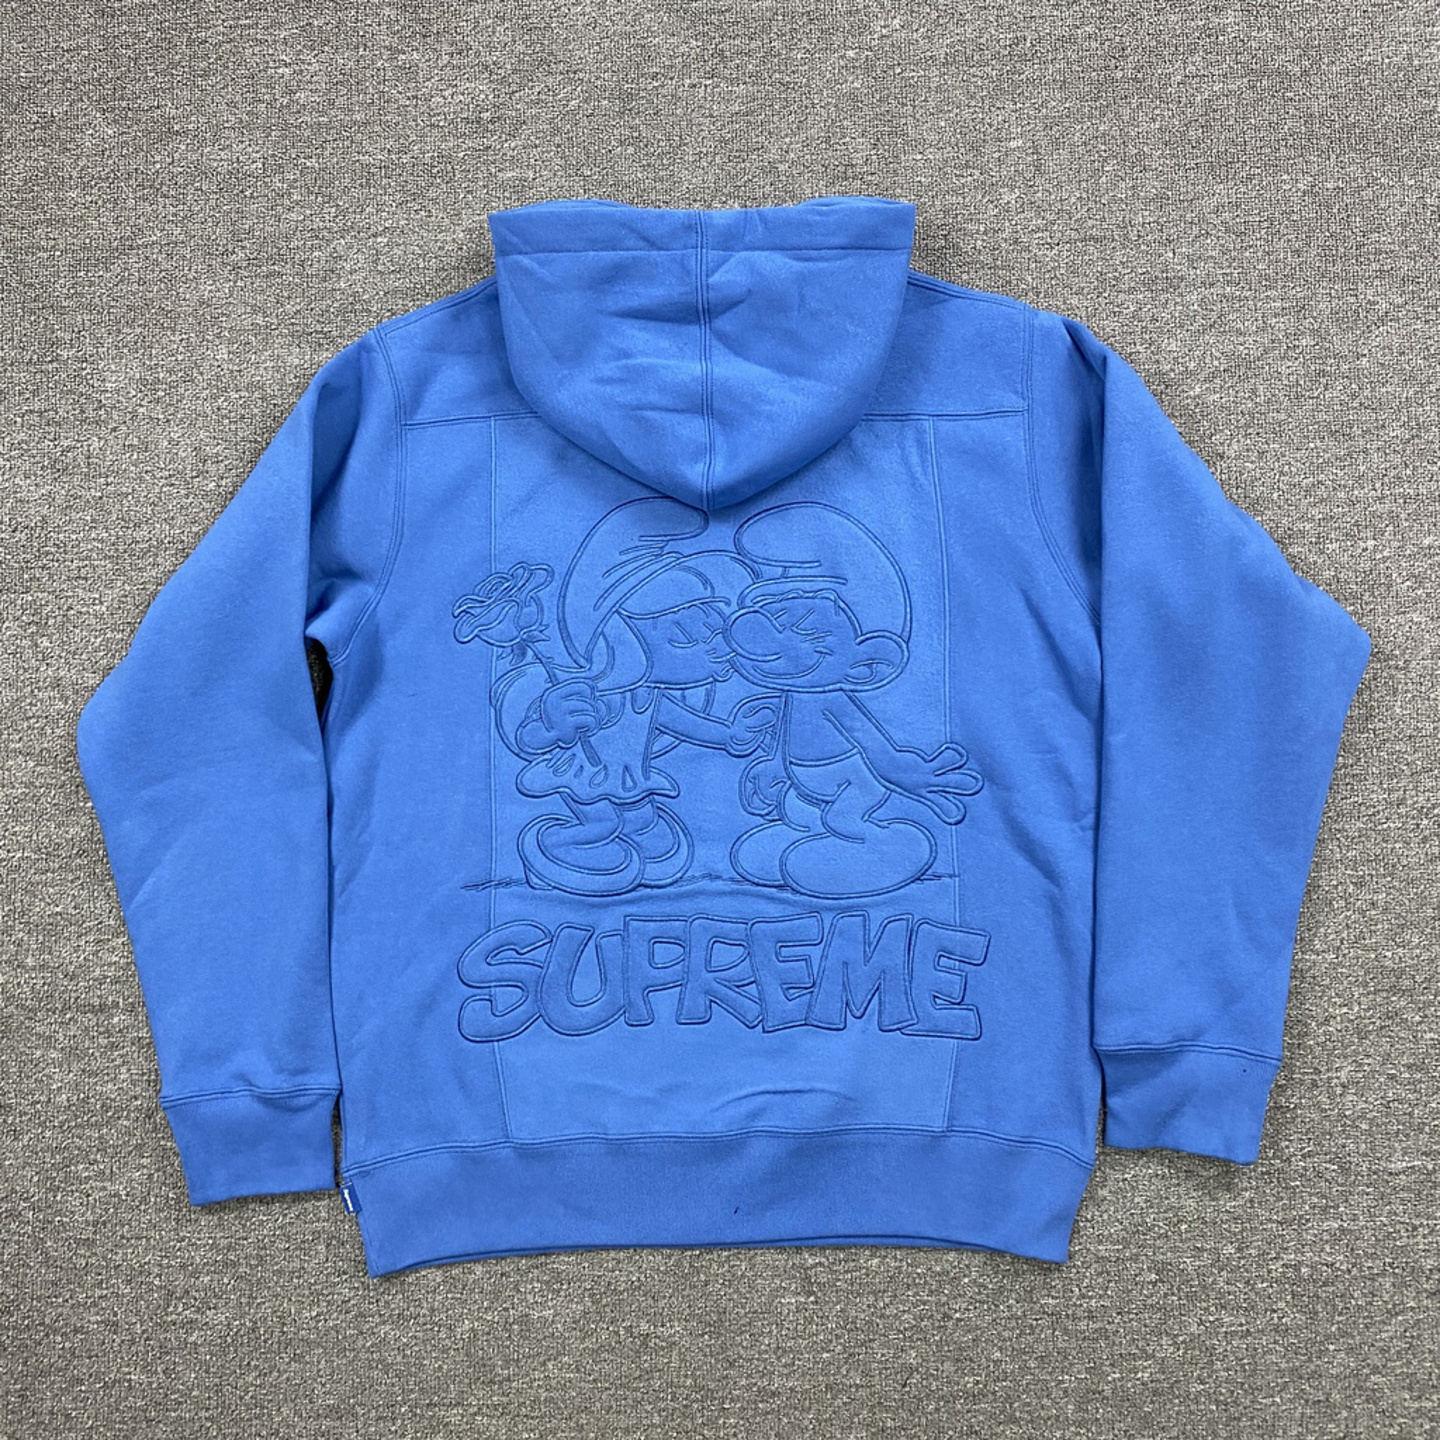 Supreme x Smurfs Hooded Sweatshirt